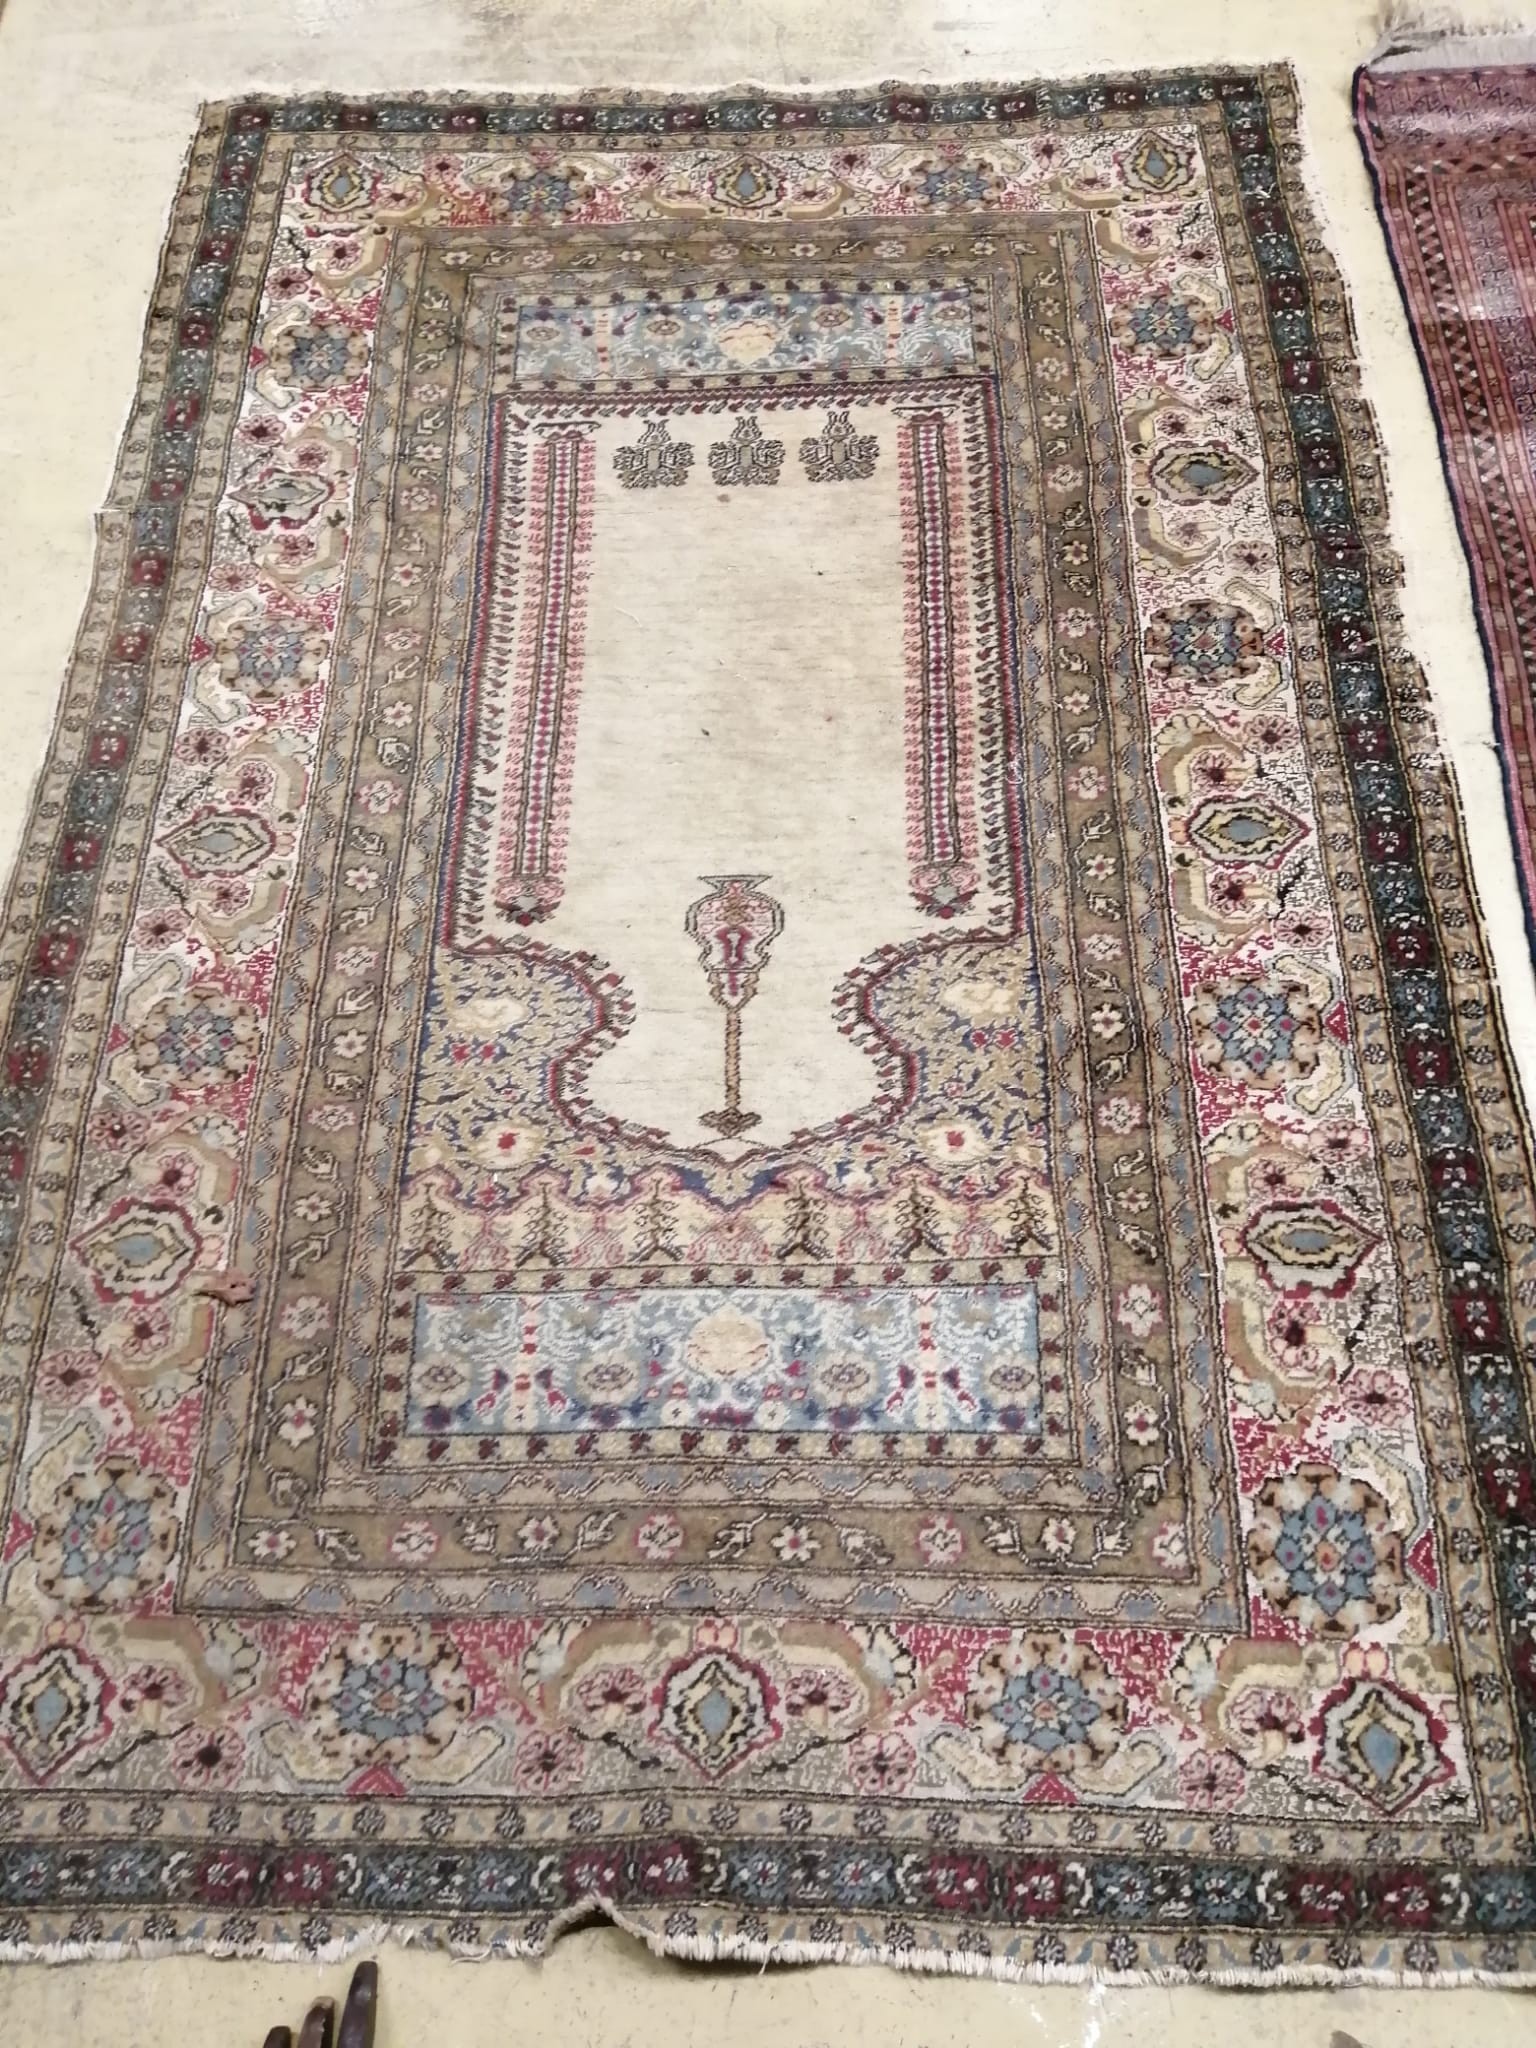 A North West Persian ivory ground prayer rug, 190 x 130cm